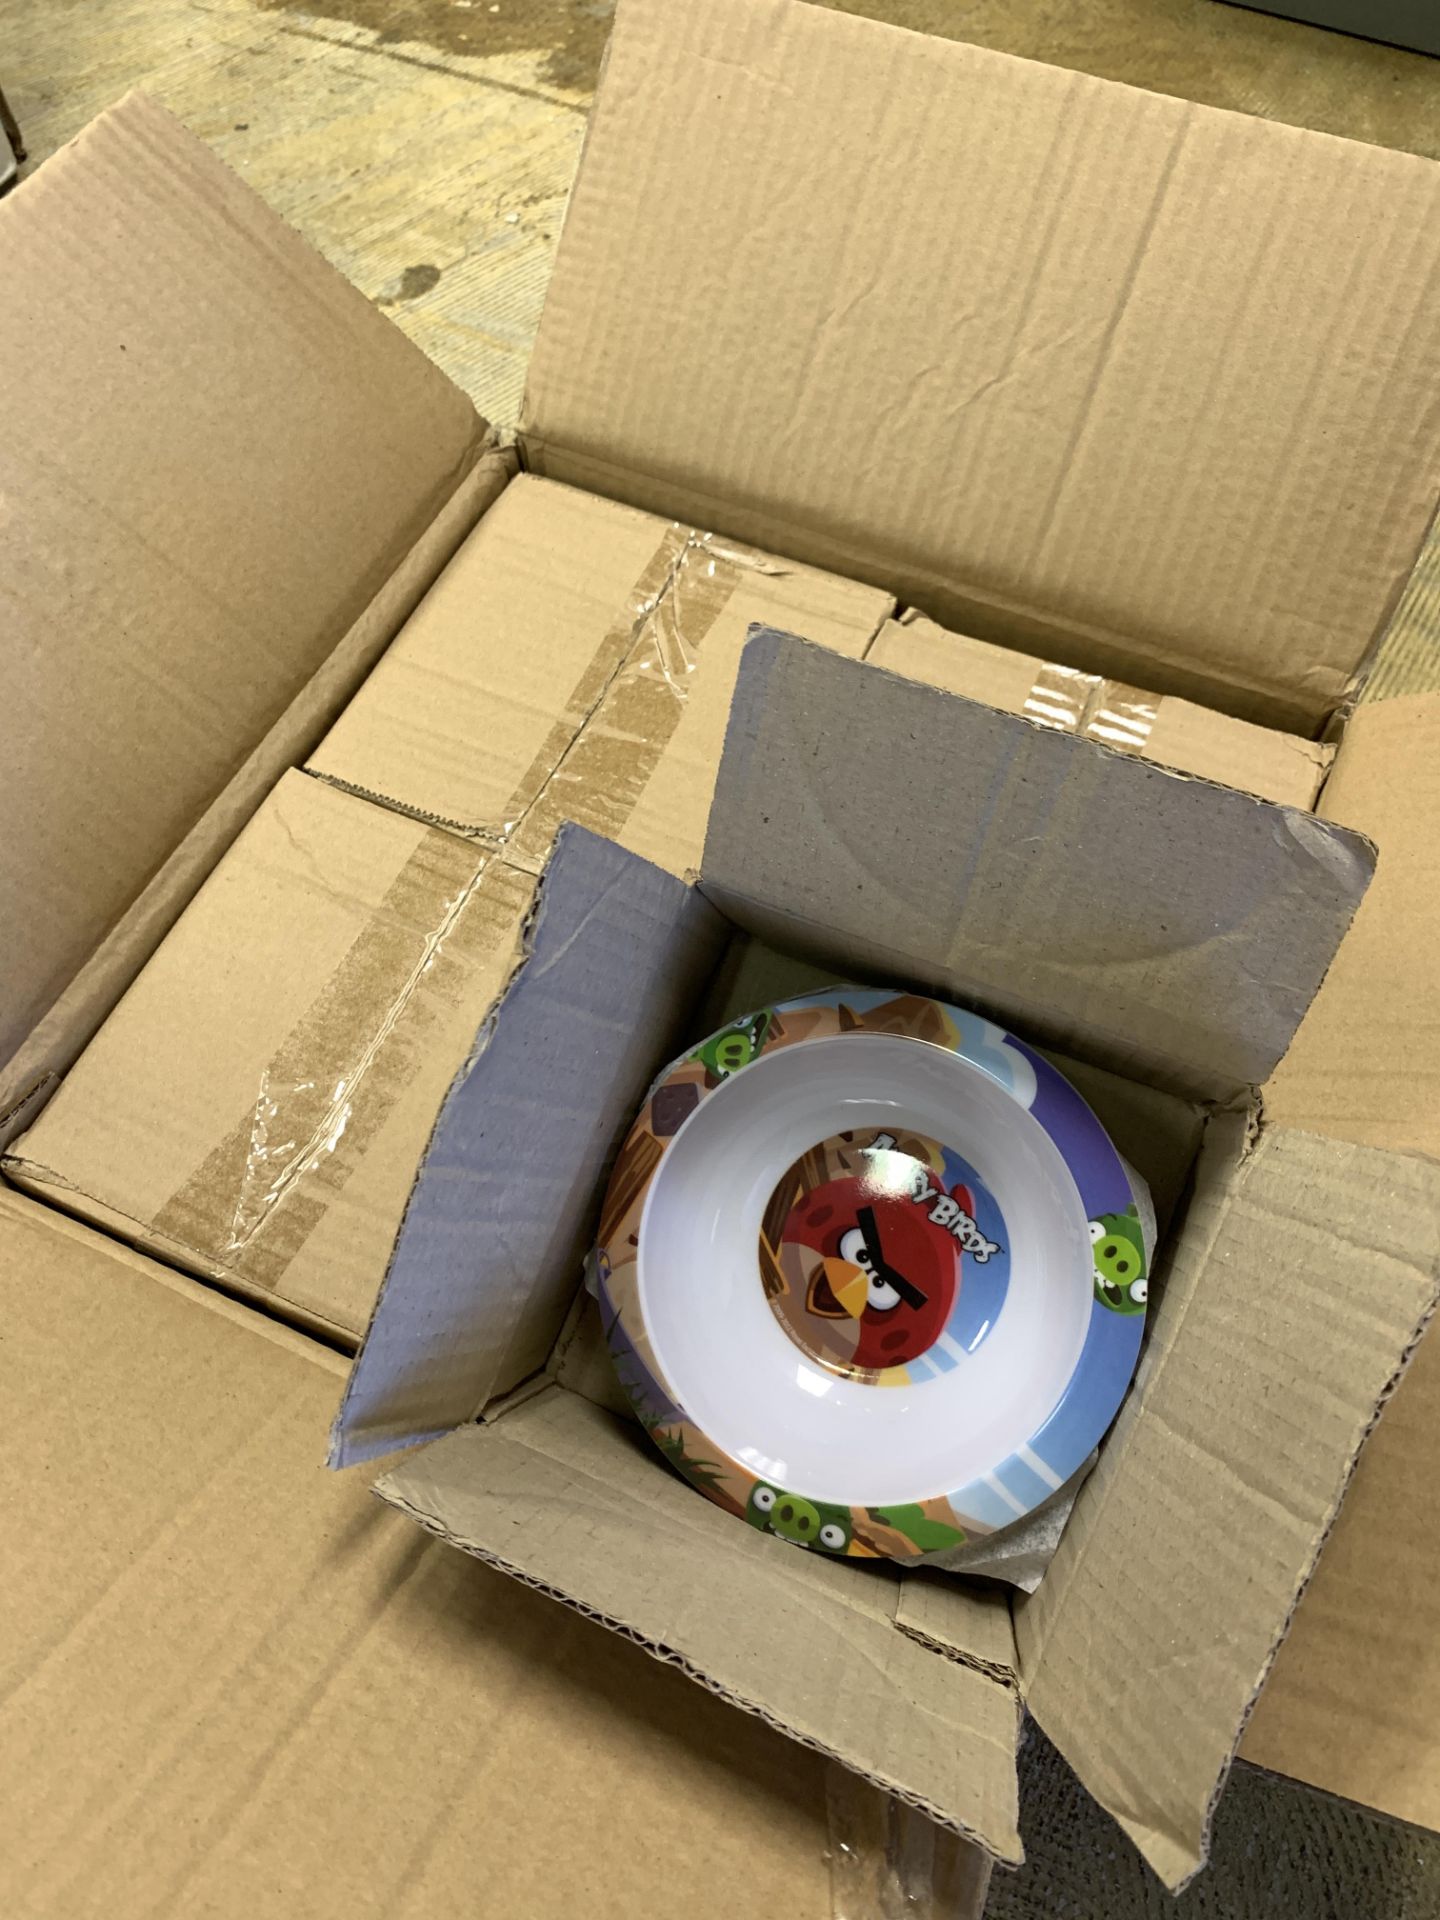 240 x Angry Birds Branded Melamine Bowls